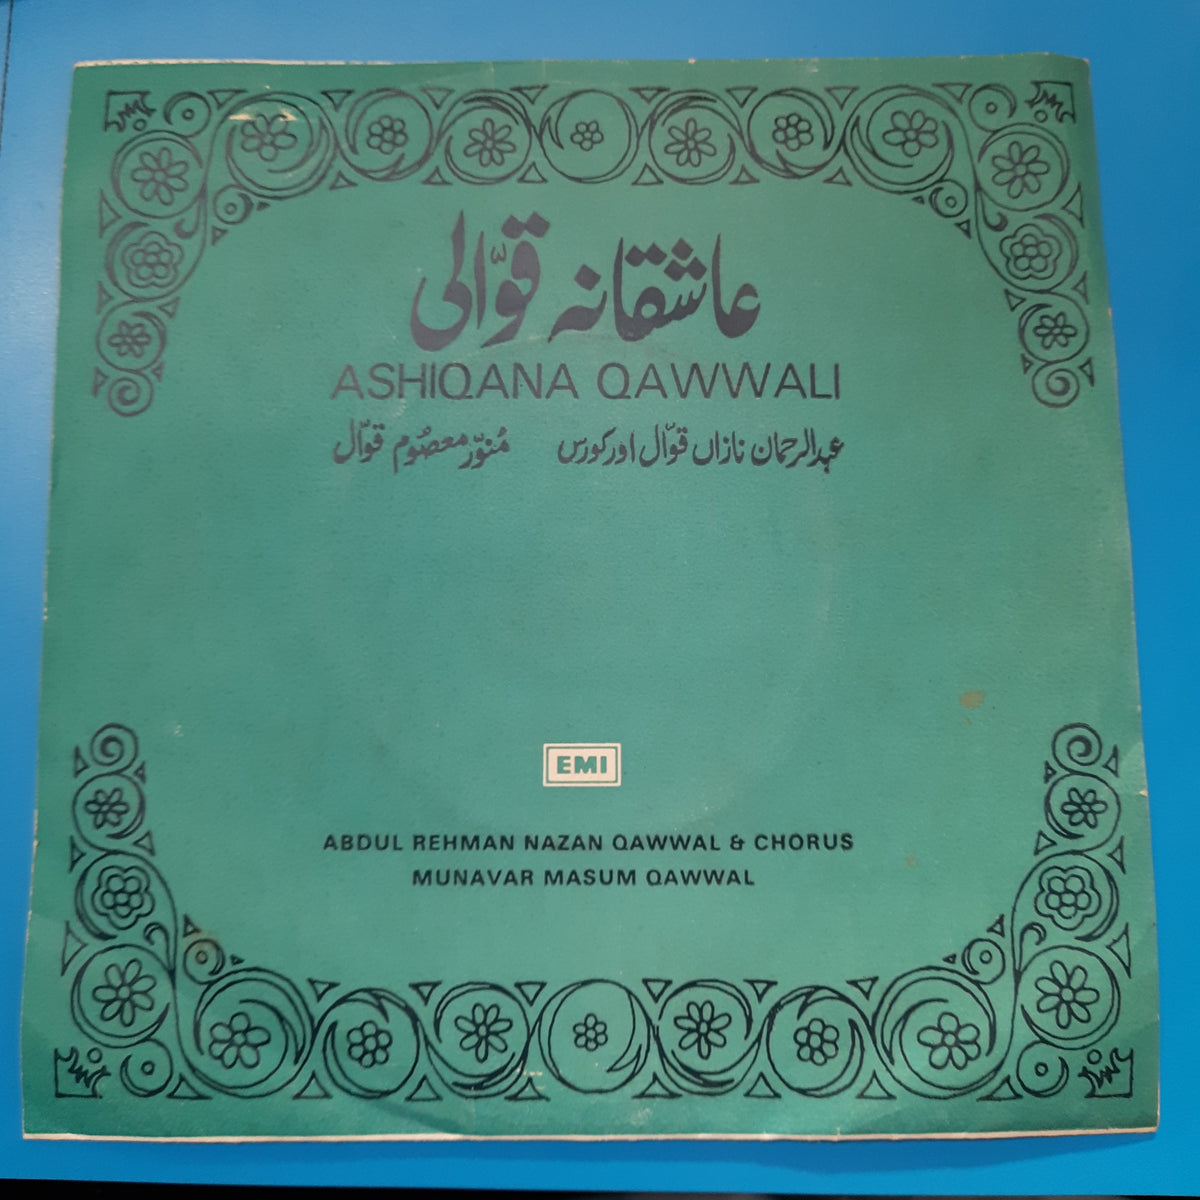 Ustad Abdul Gafoor - Ashiiqana Qawwali (45-RPM)